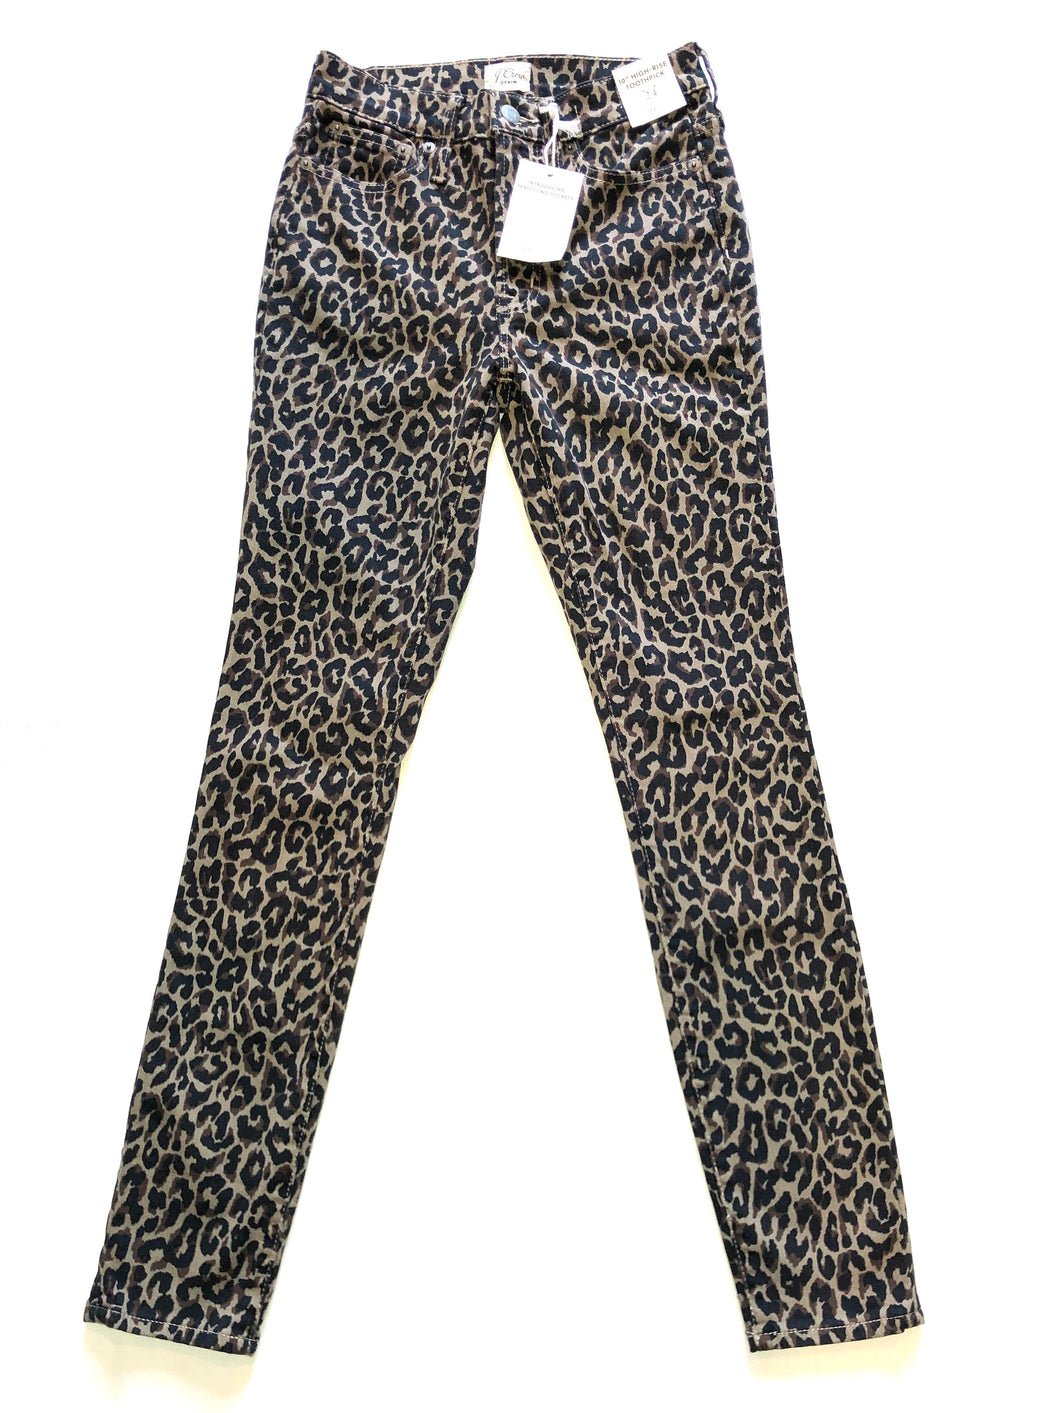 J Crew women’s 10” hi rise toothpick leopard skinny jeans 24 NEW